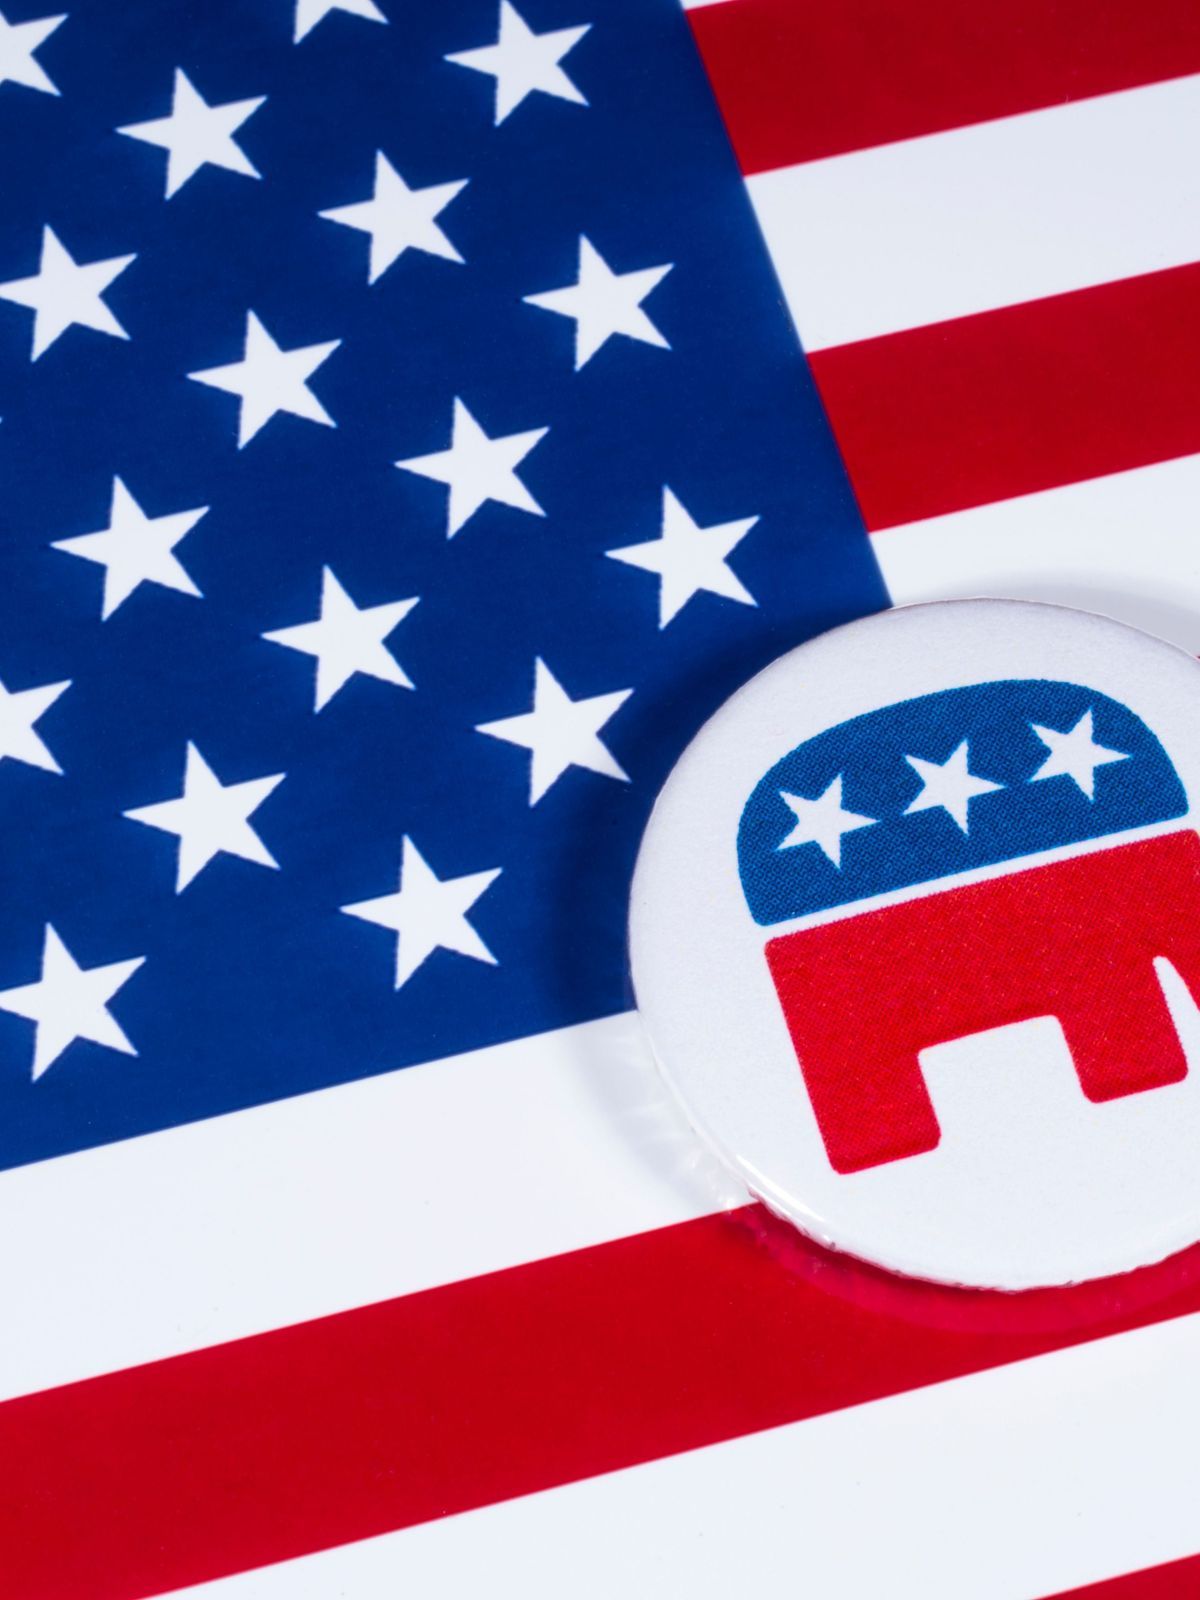 republikaner elefant 786450130